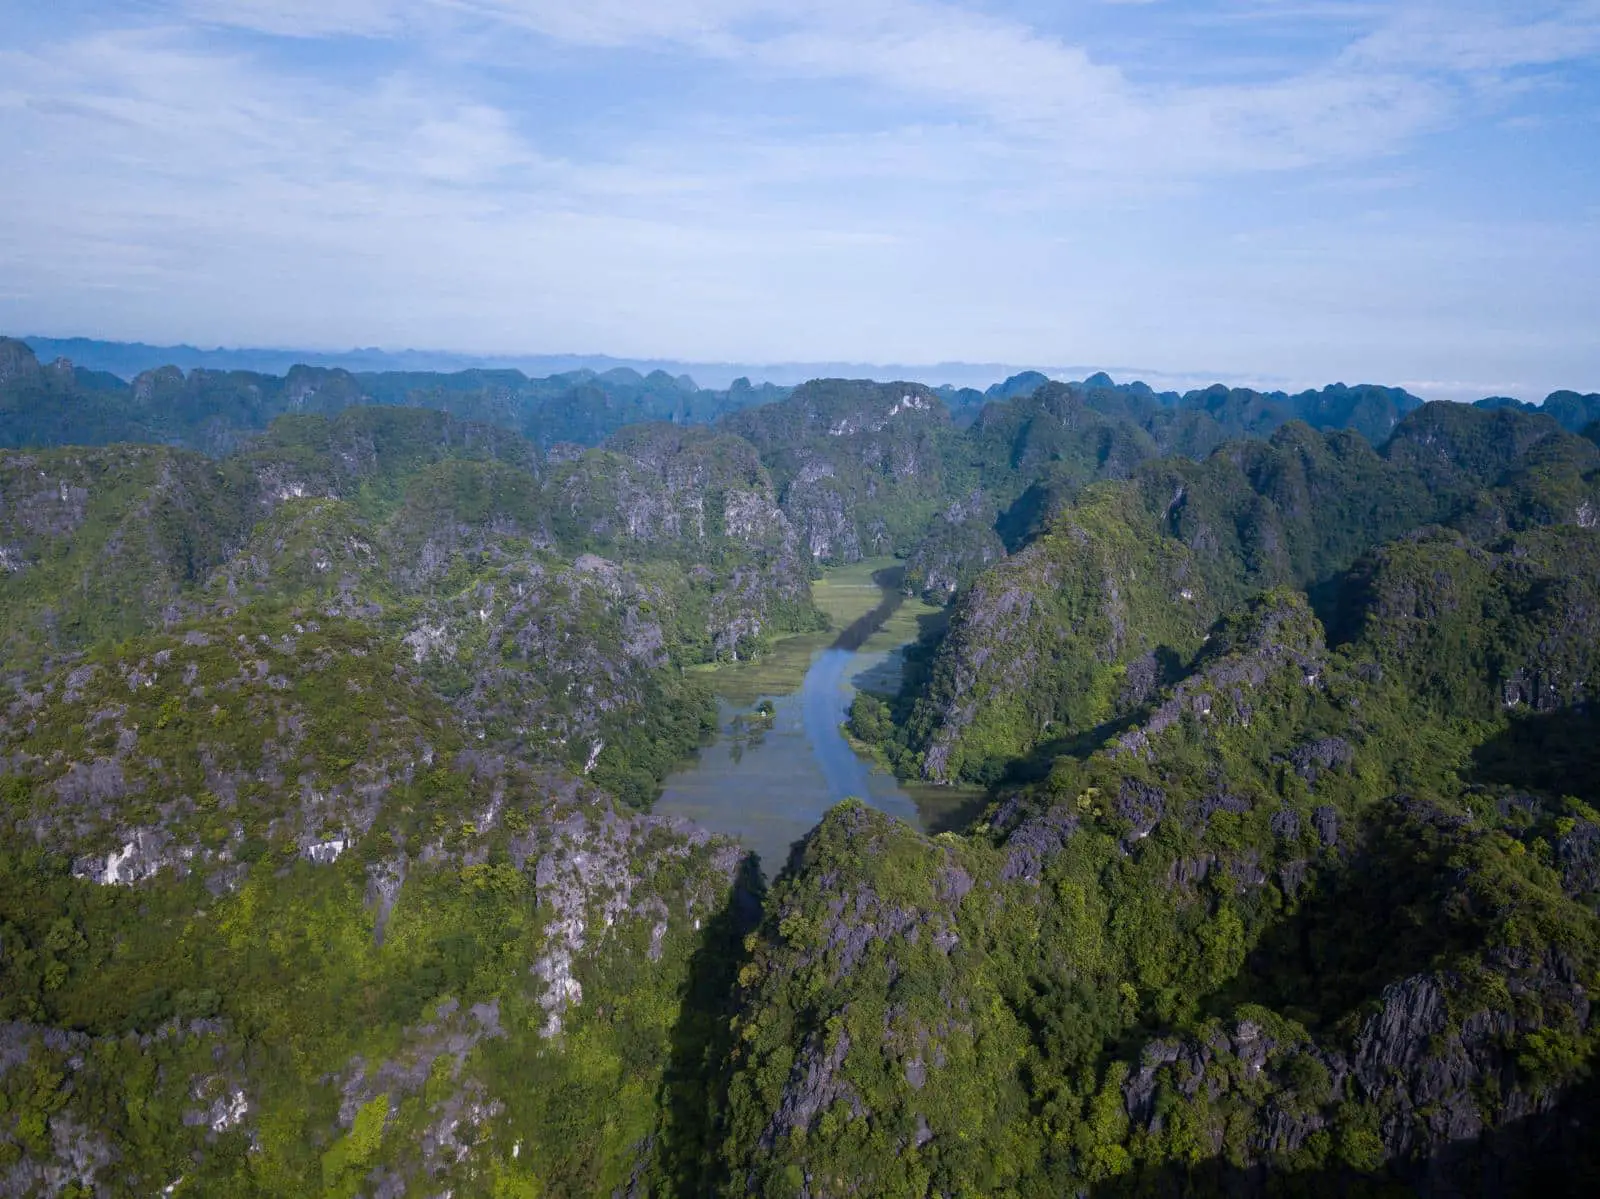 Mua Cave Ninh Binh - Vietnams Best Lookout - Unexplored Footsteps 4